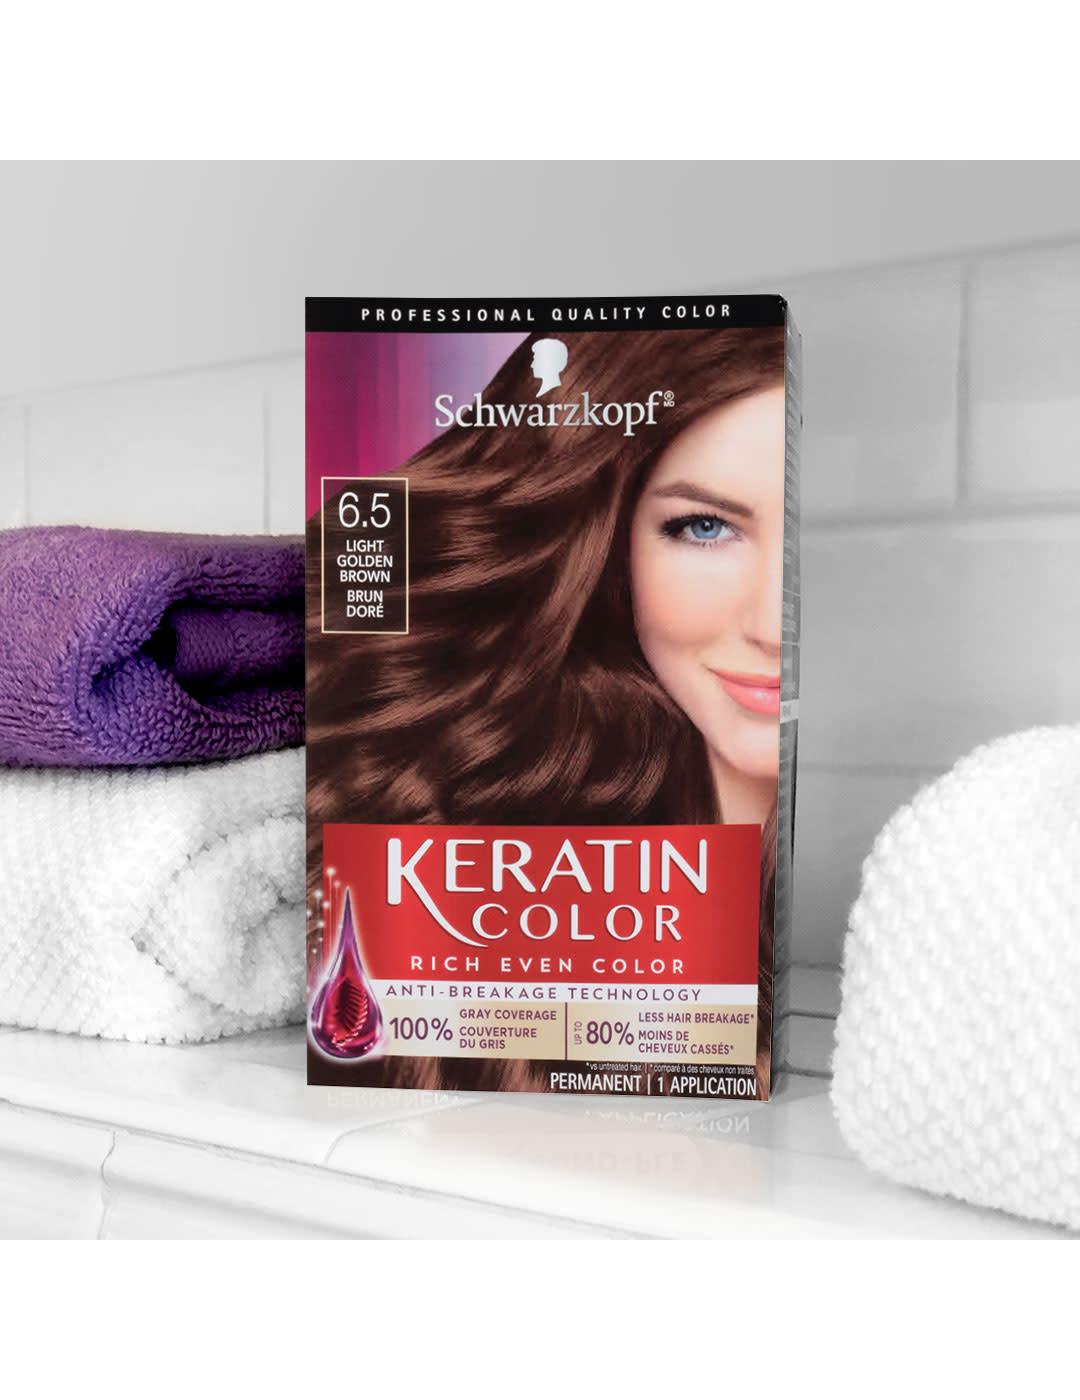 Schwarzkopf Keratin Color Permanent Hair Color Cream, 6.5 Light Golden Brown; image 4 of 5